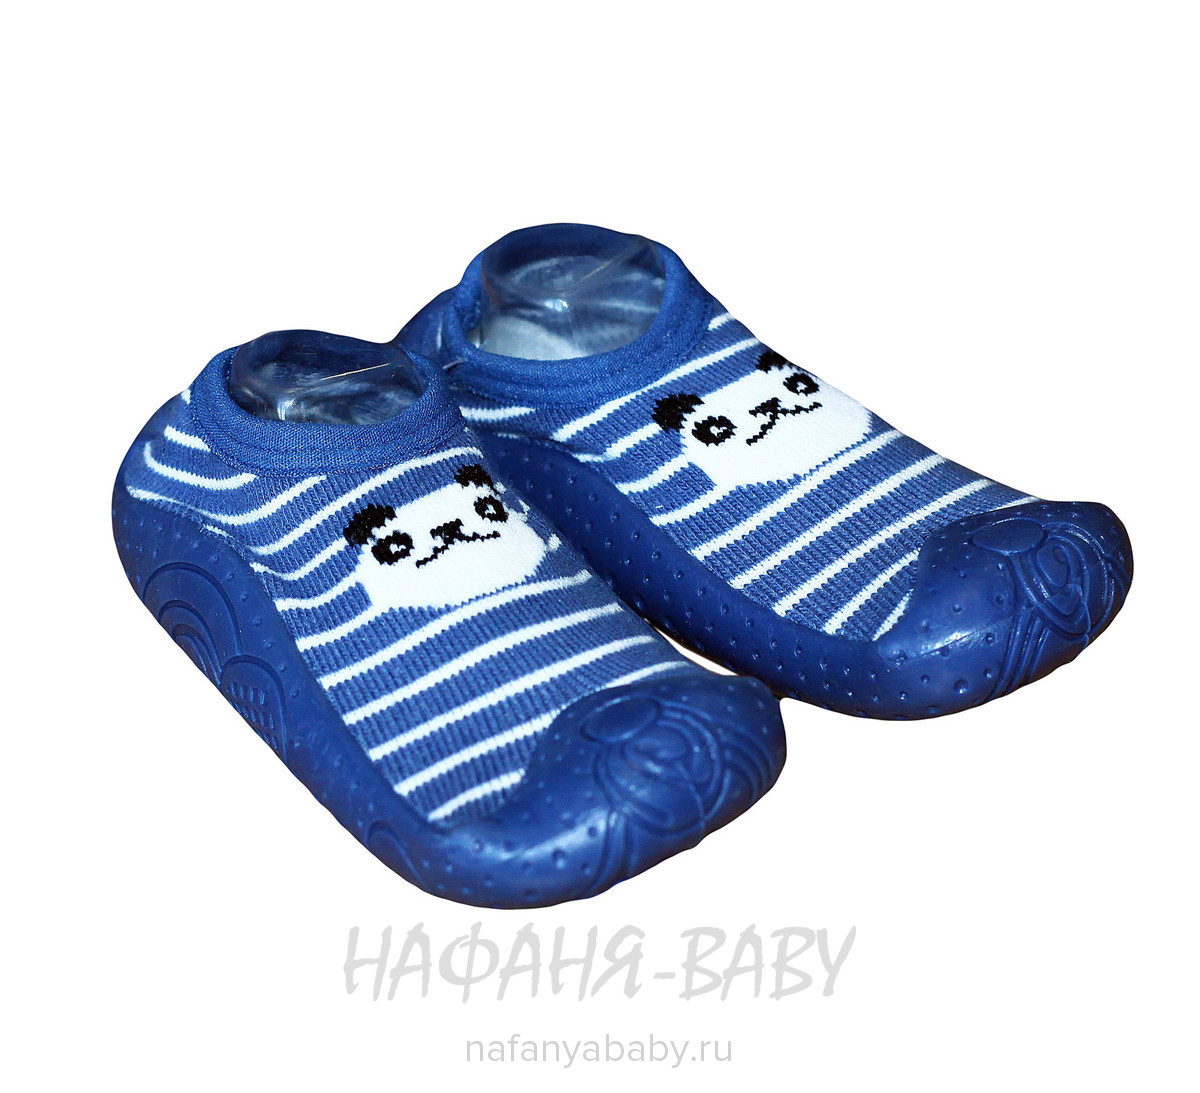 Ботиночки - носочки Fluo Sand арт: 7053, 1-4 года, 0-12 мес, оптом Китай (Пекин)